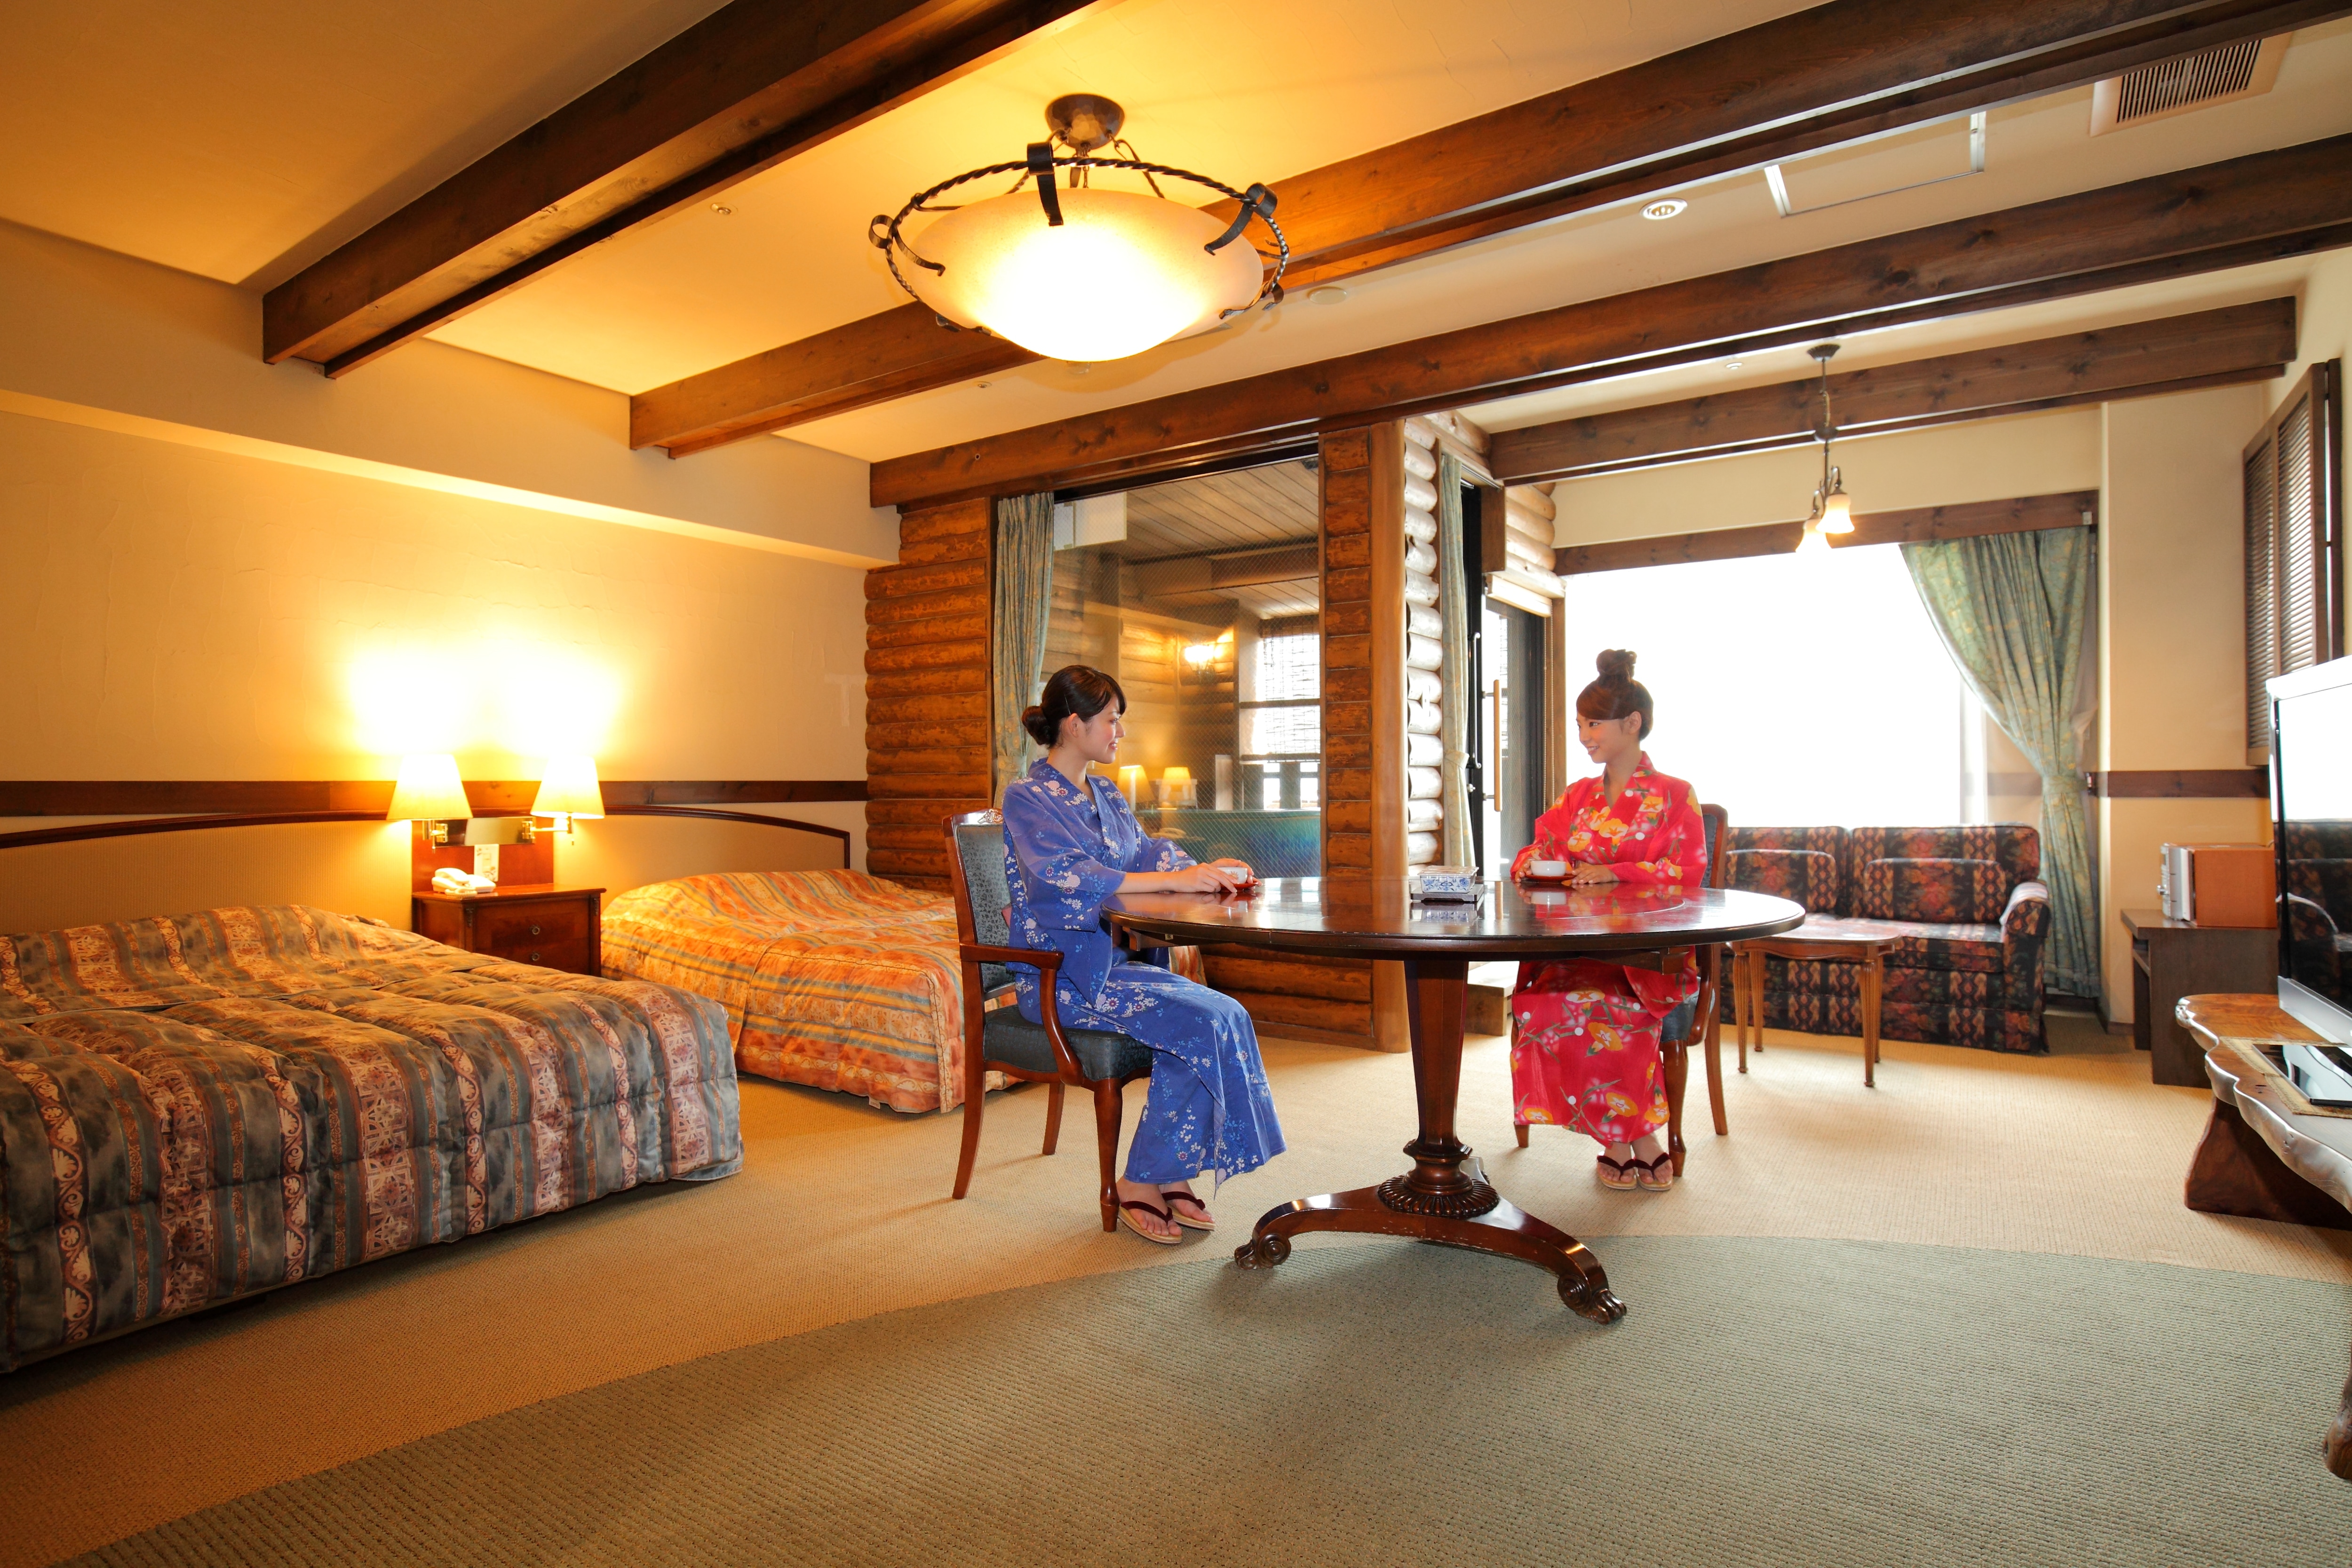 Sasarakan Western-style room with open-air bath "Bosco"